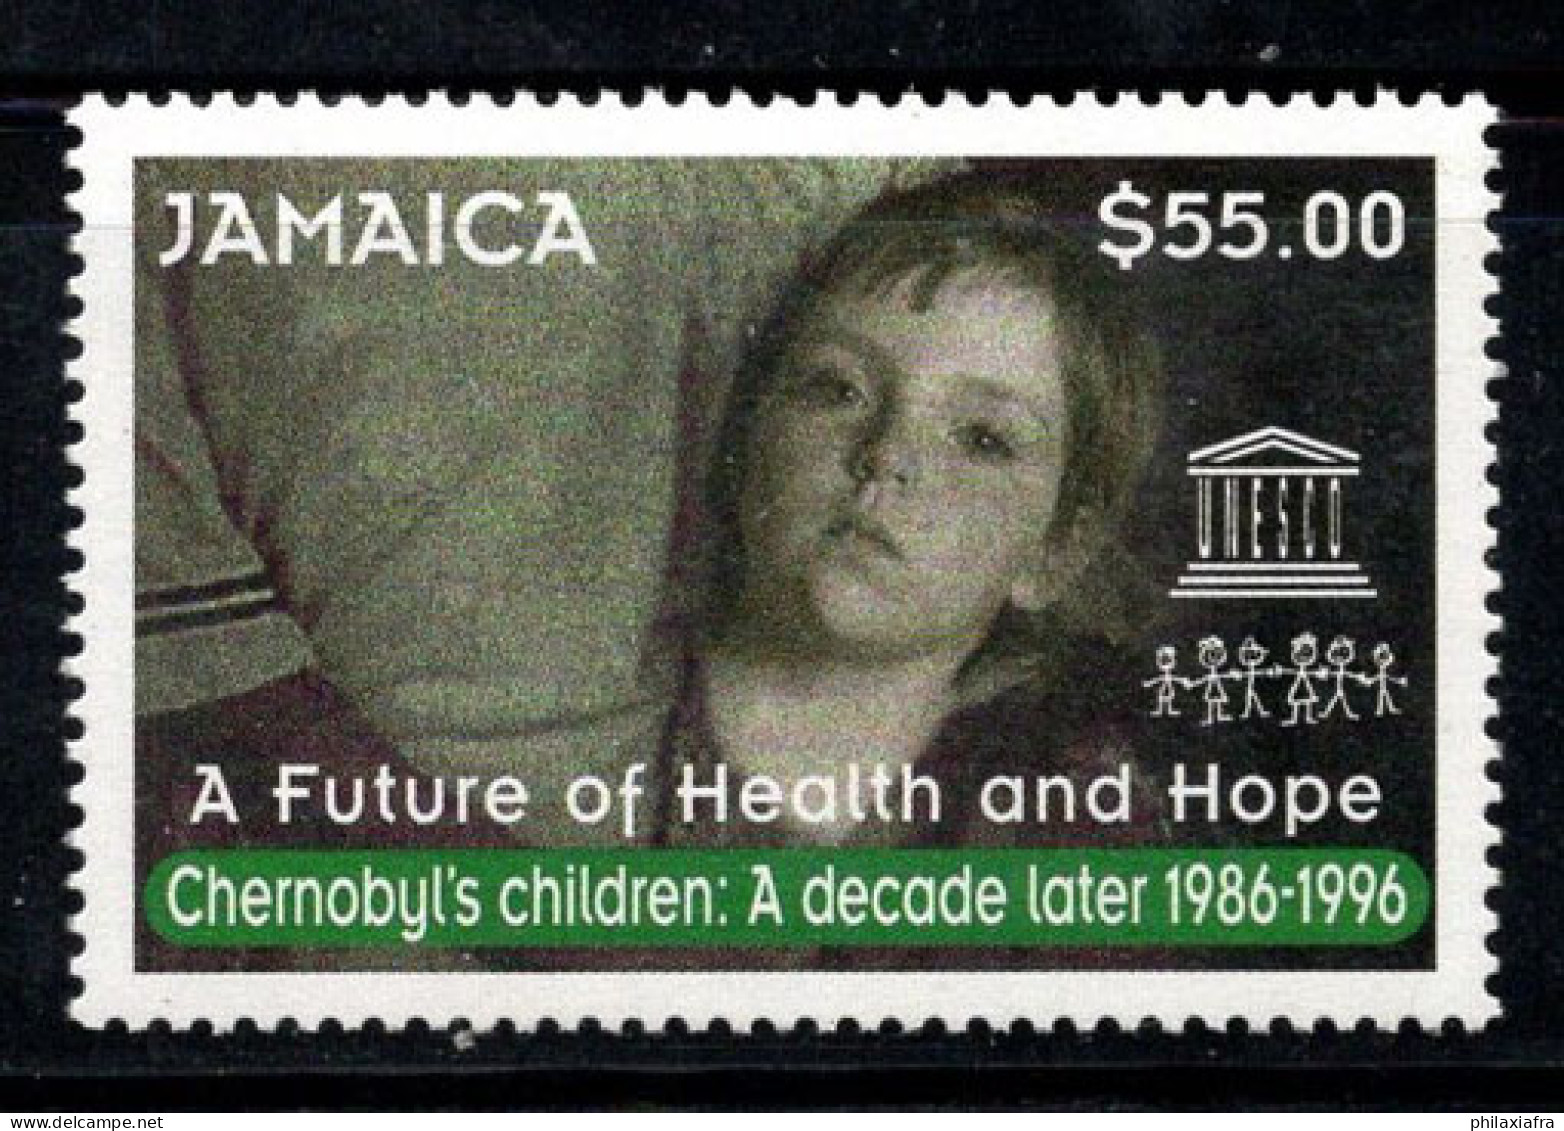 Jamaïque 1997 Mi. 889 Neuf ** 100% 55 $, UNESCO - Jamaica (1962-...)